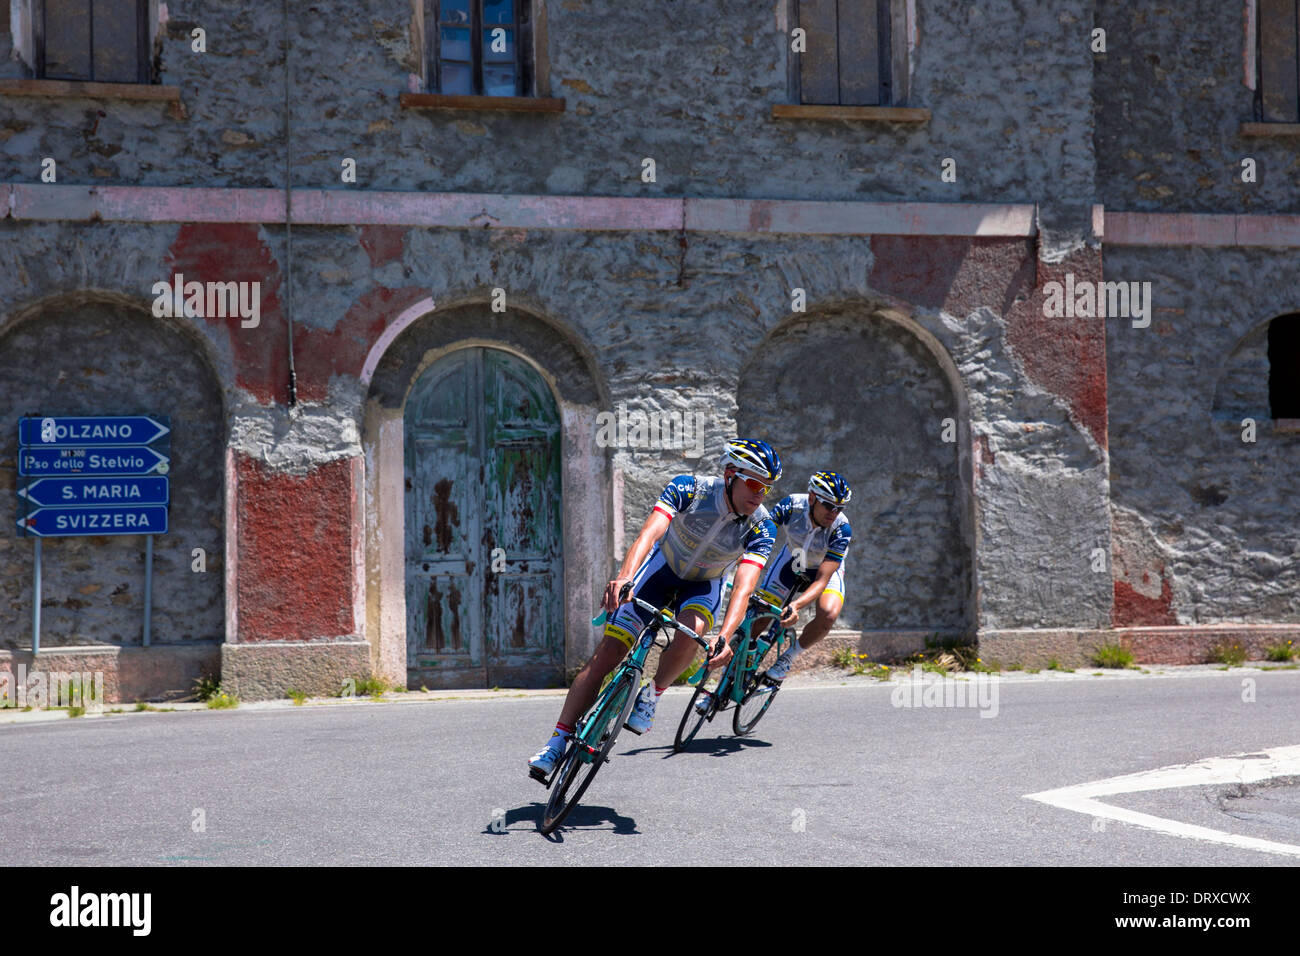 Cyclists ride Bianchi roadbikes on The Stelvio Pass, Passo dello Stelvio, Stilfser Joch, in Northern Italy Stock Photo